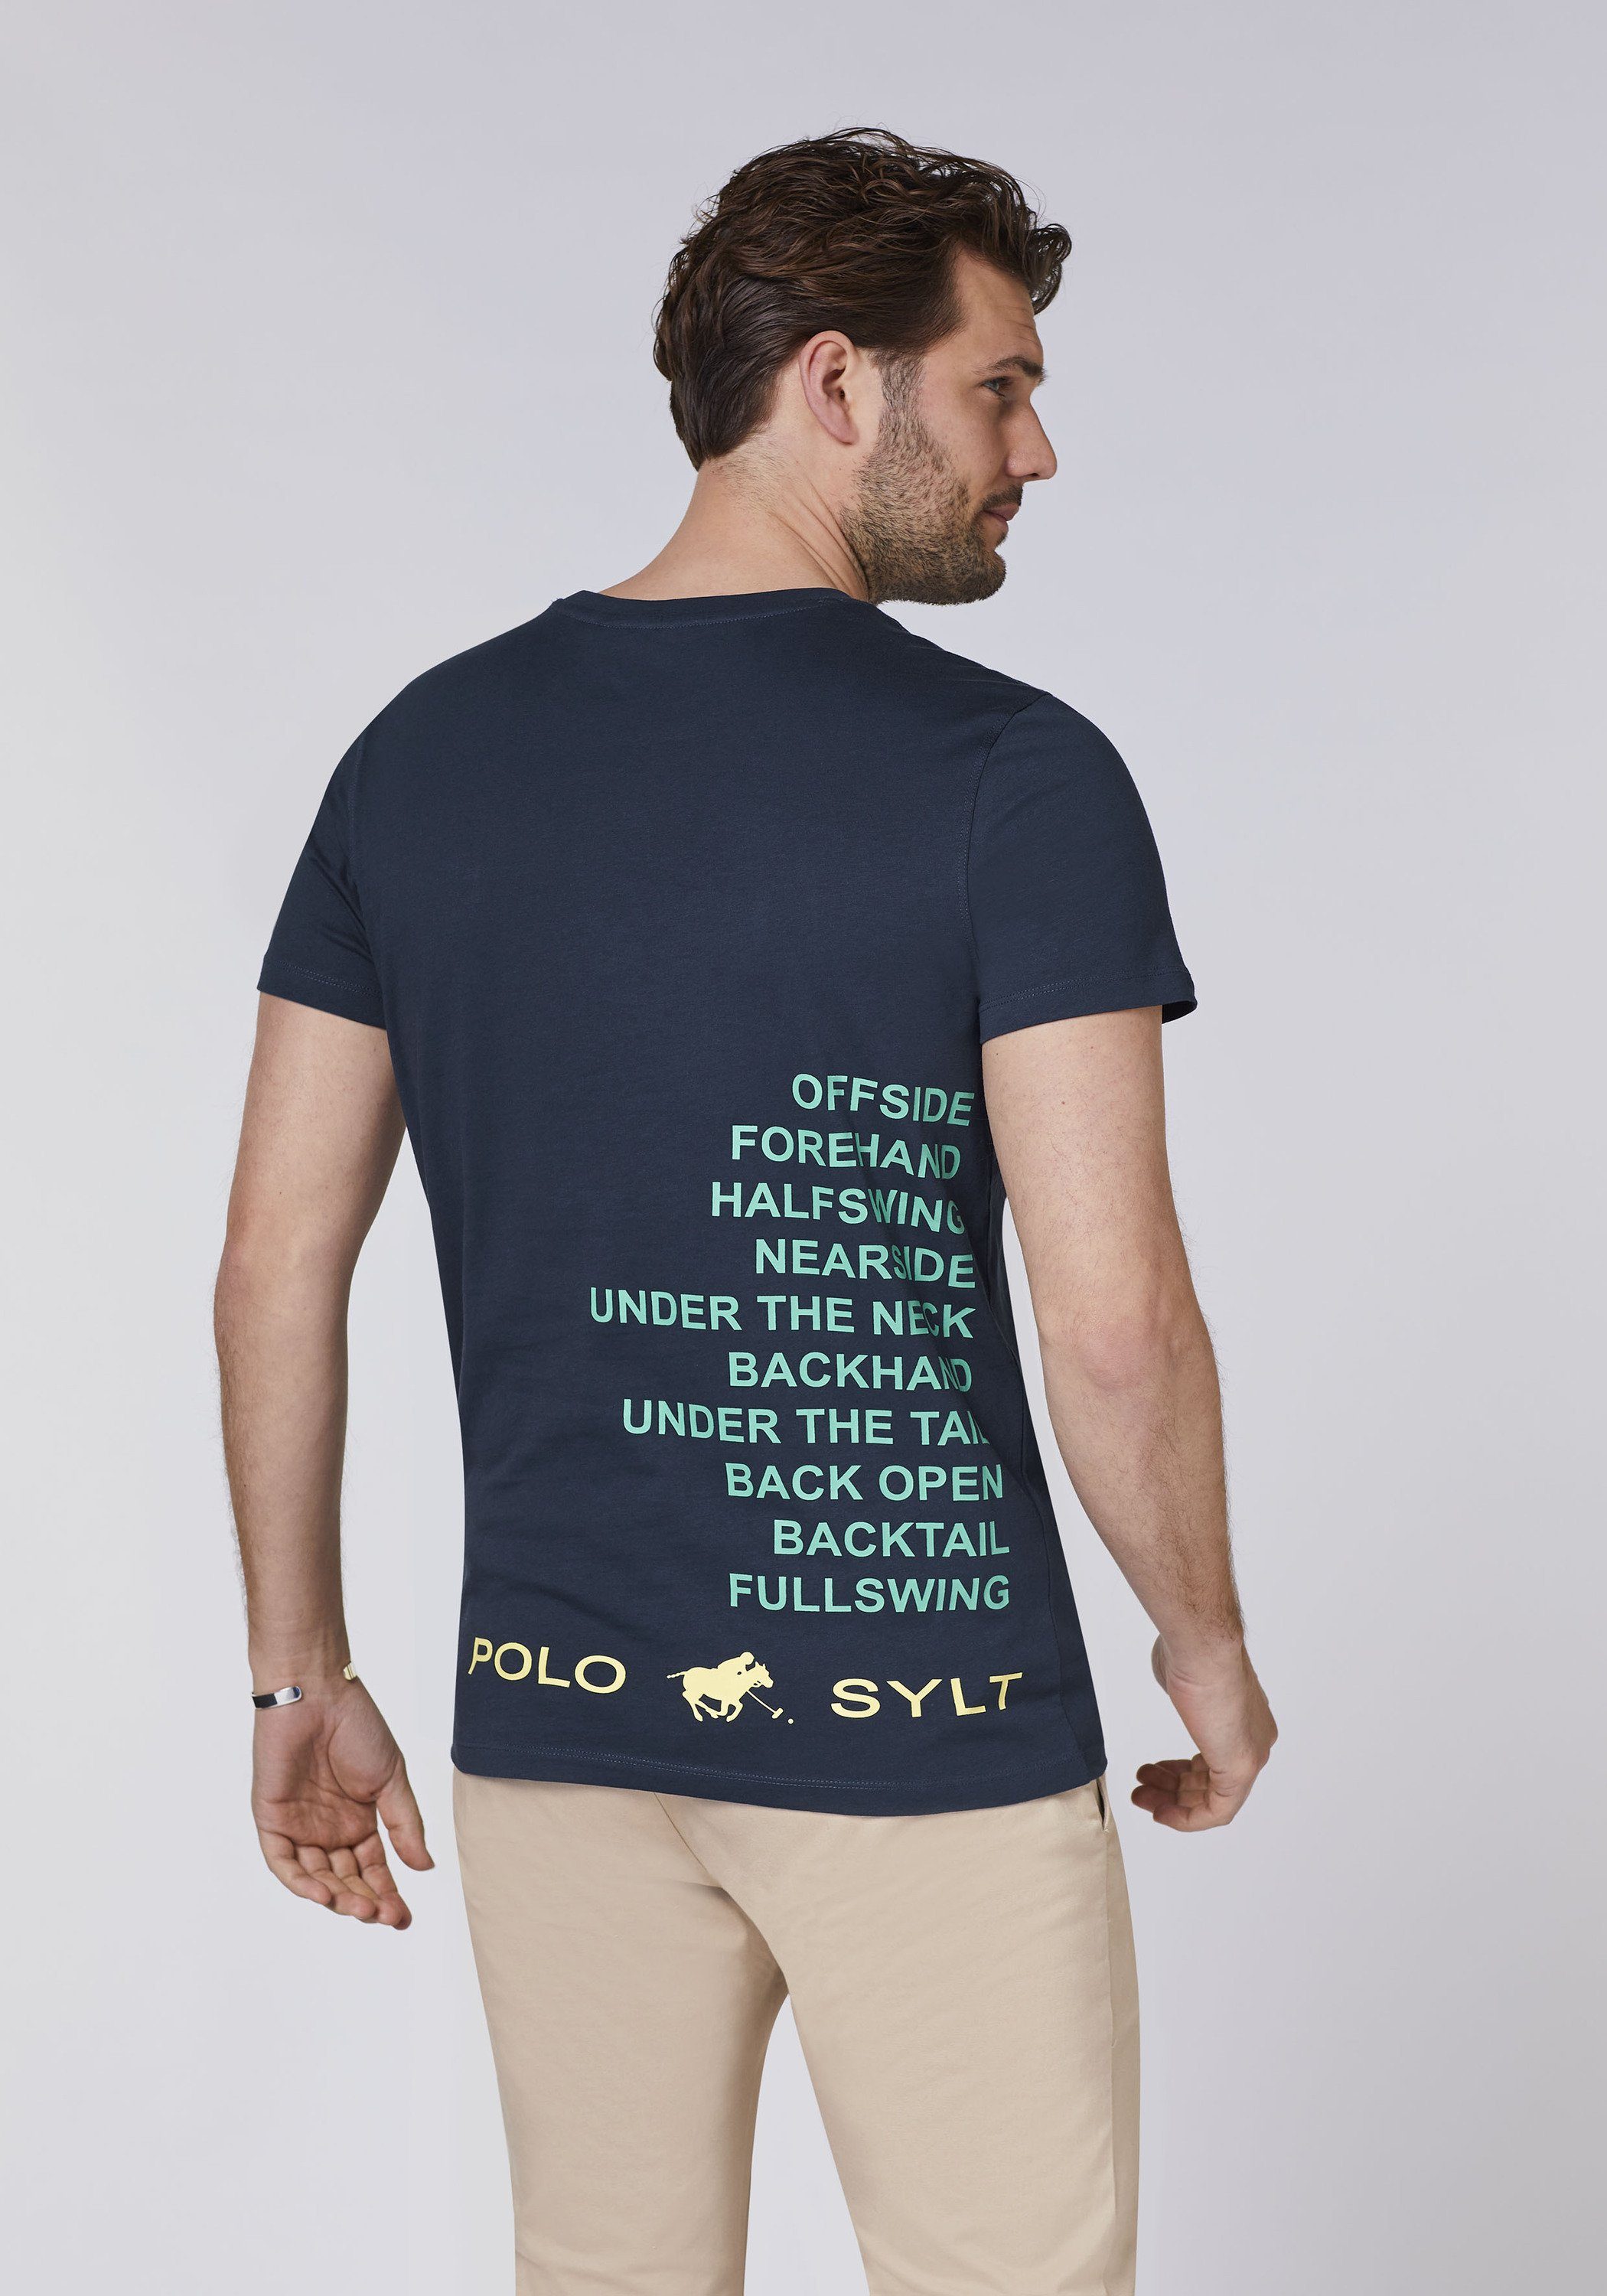 Polo Print-Botschaft 19-4010 Sylt Eclipse Print-Shirt mit Total